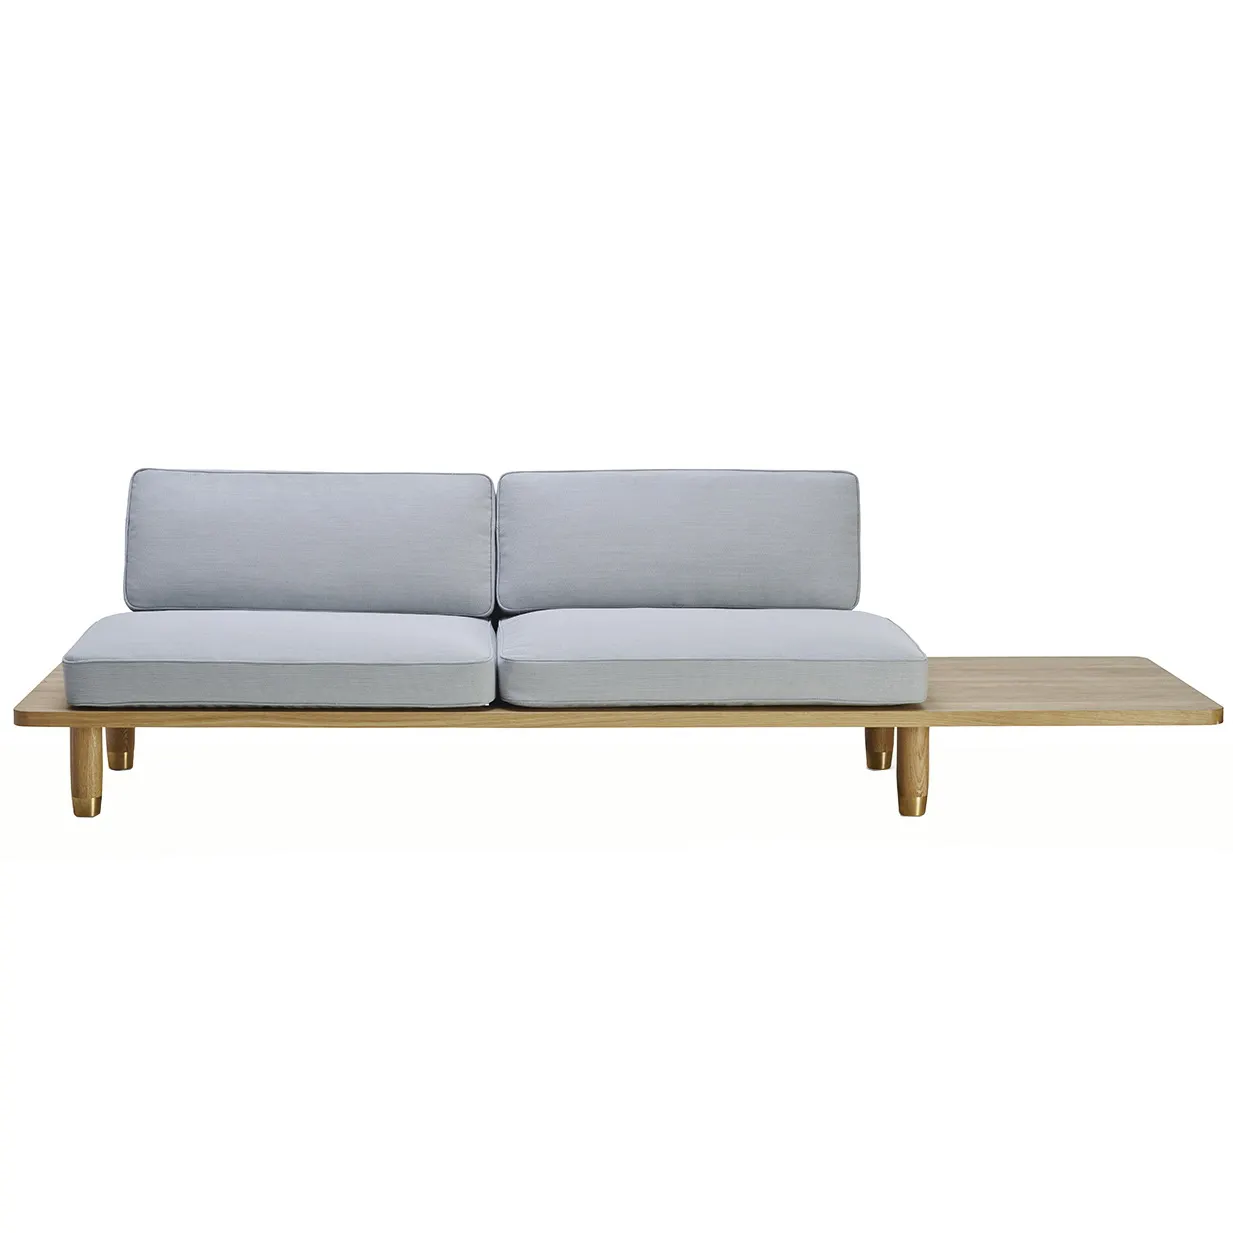 Living Room Furniture comfortable simple design frame wooden sofa